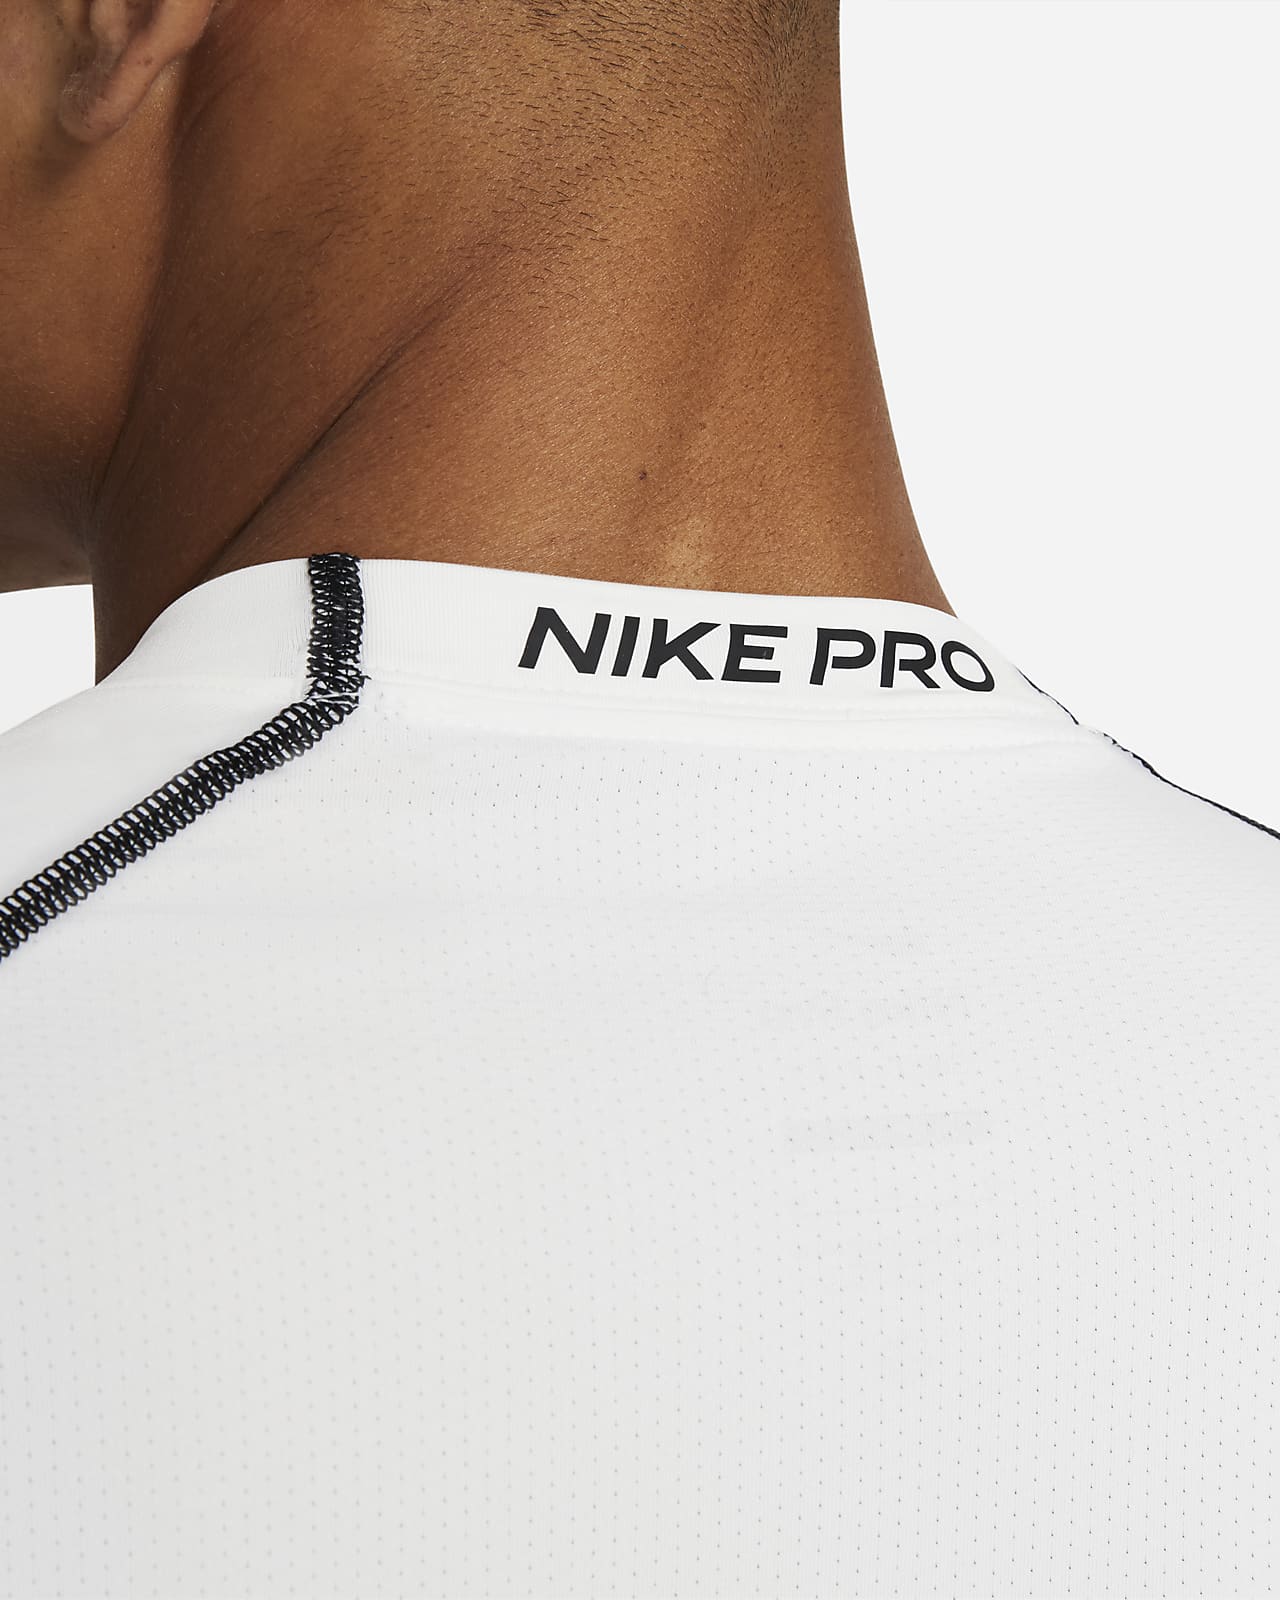 automaton Mouthpiece Yellowish Nike Pro Dri-FIT Men's Slim Fit Long-Sleeve Top. Nike.com